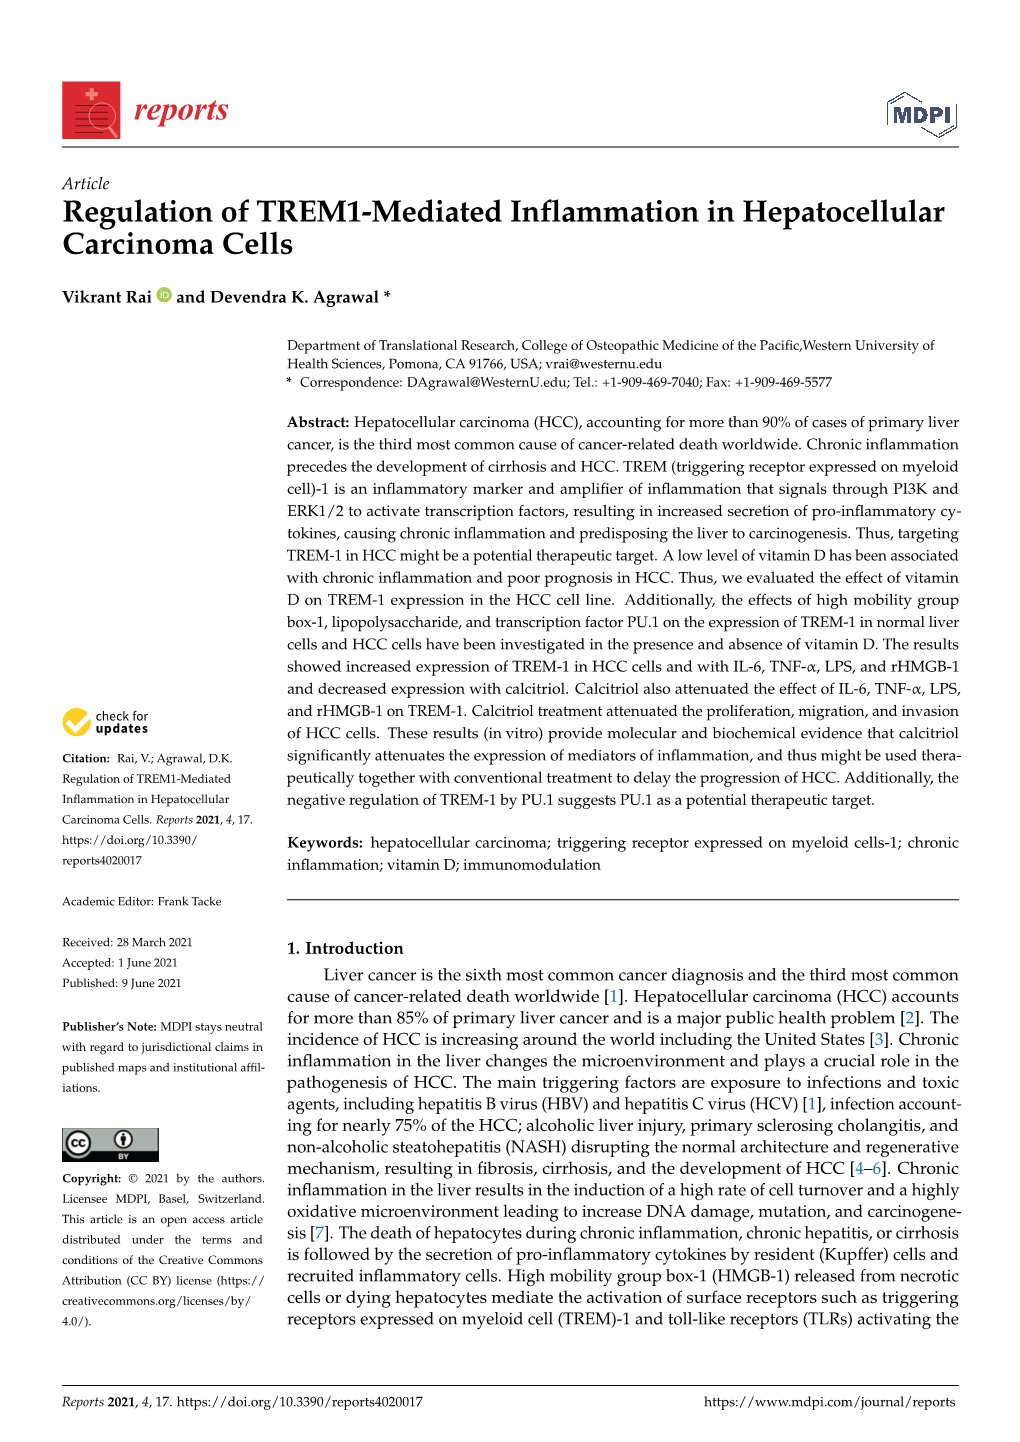 Regulation of TREM1-Mediated Inflammation in Hepatocellular Carcinoma Cells